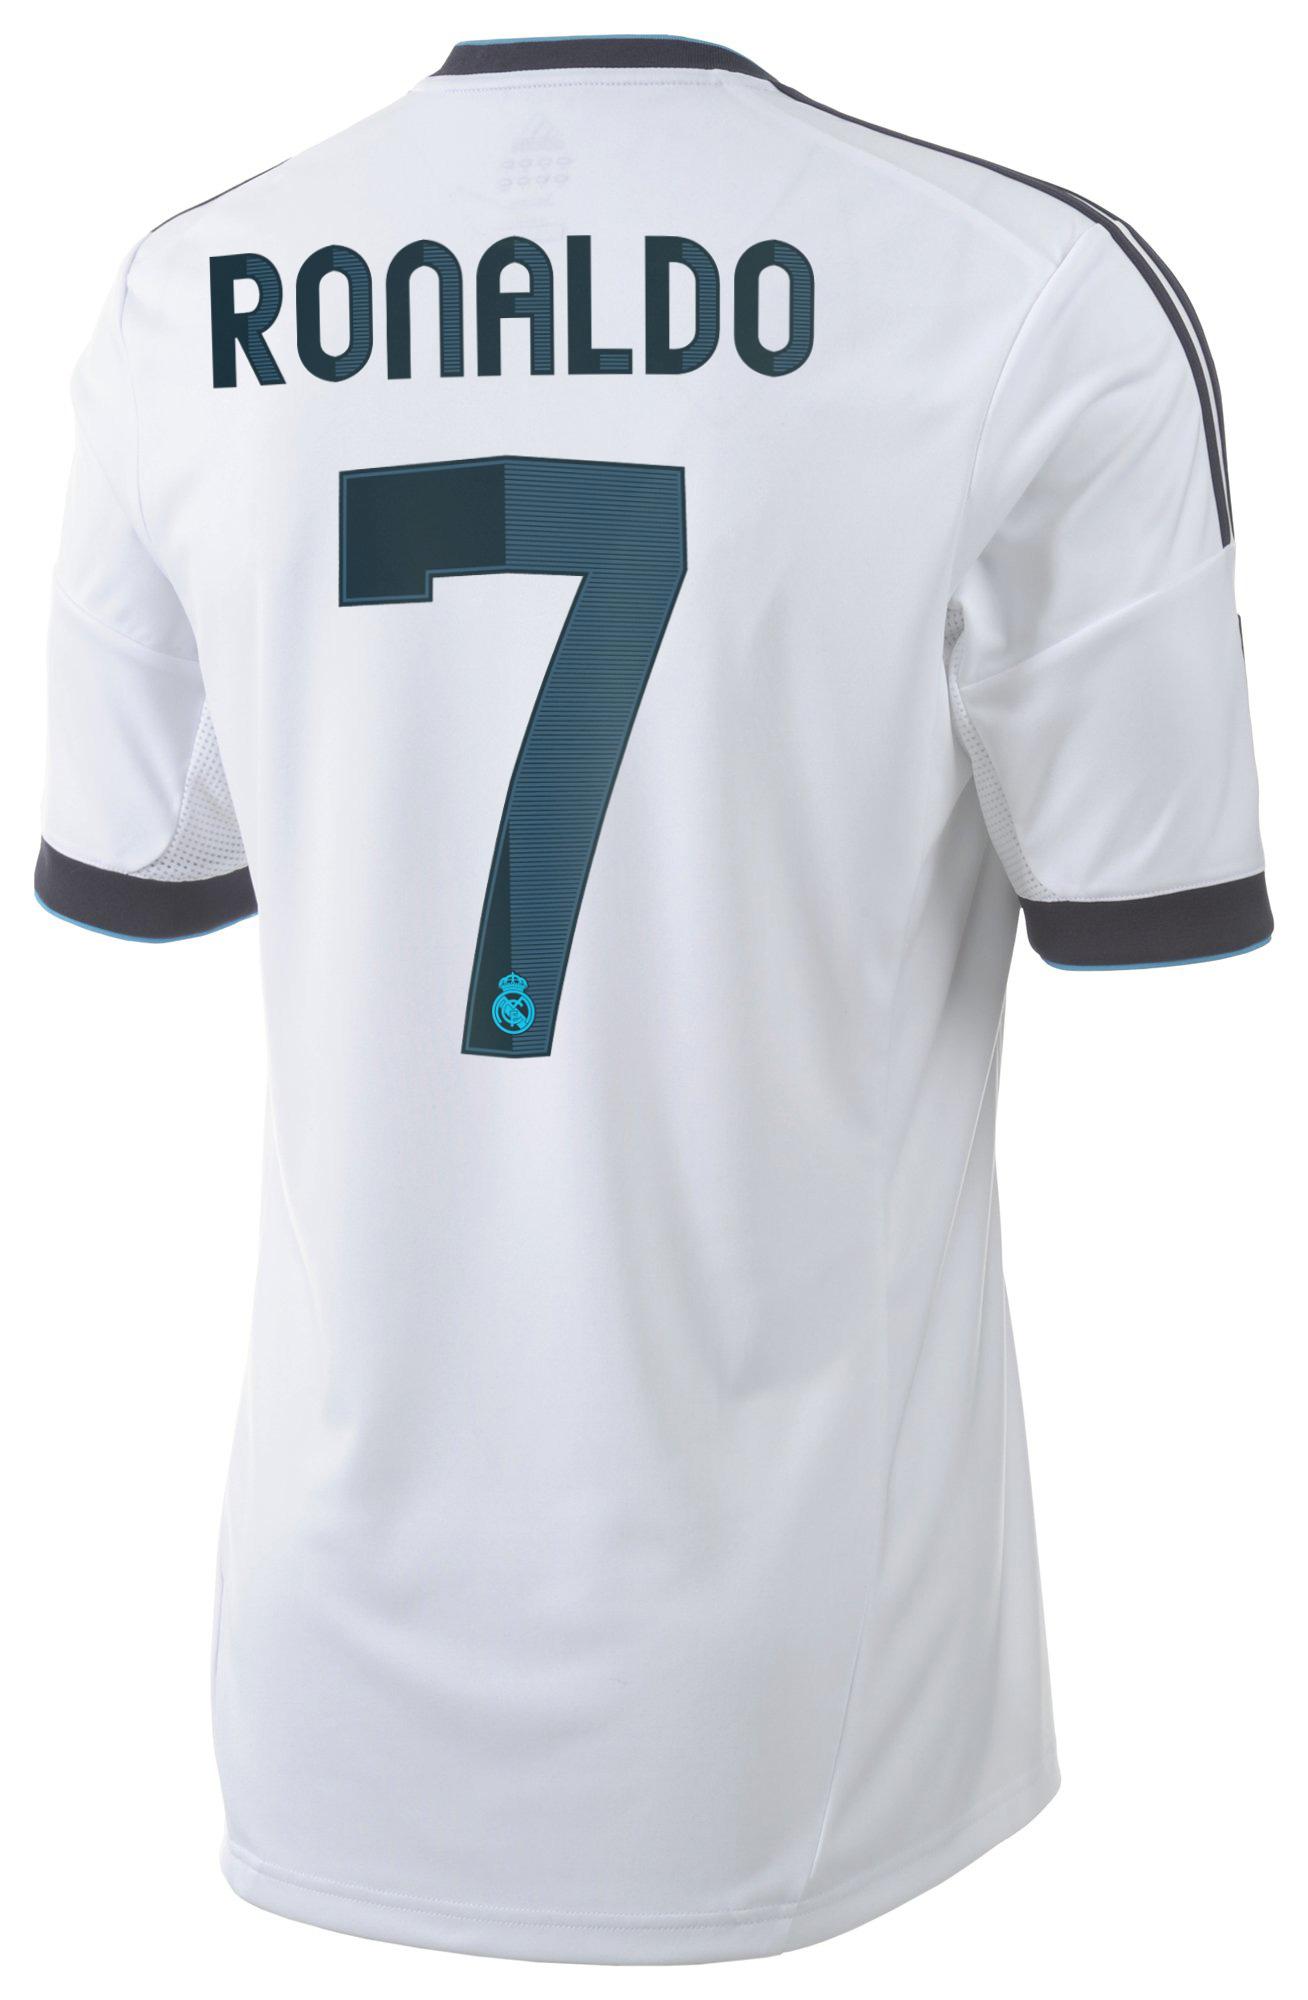 Foto adidas Real Madrid Home Jersey - Ronaldo 7